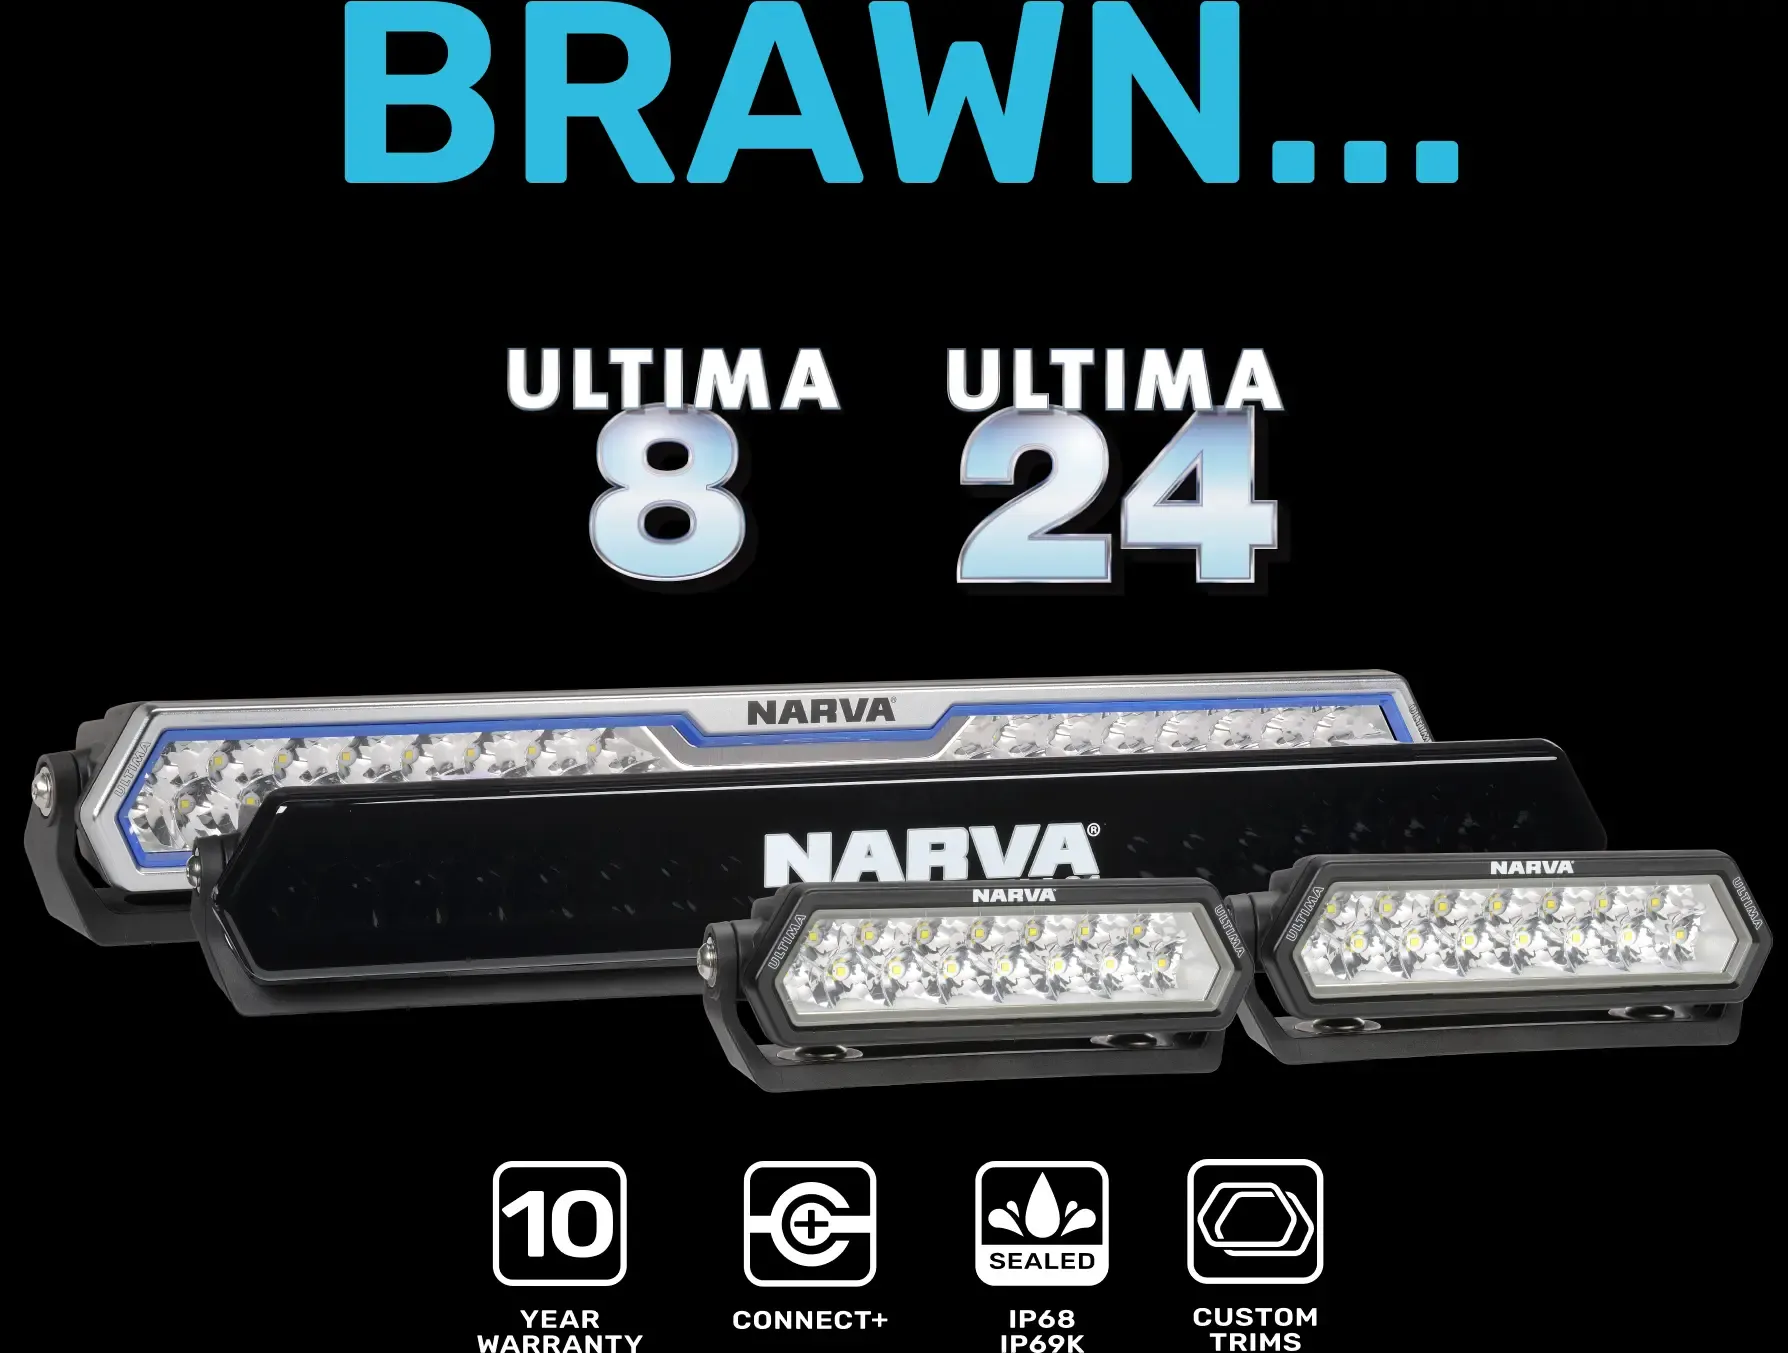 Brawn... Ultima 8, Ultima 24